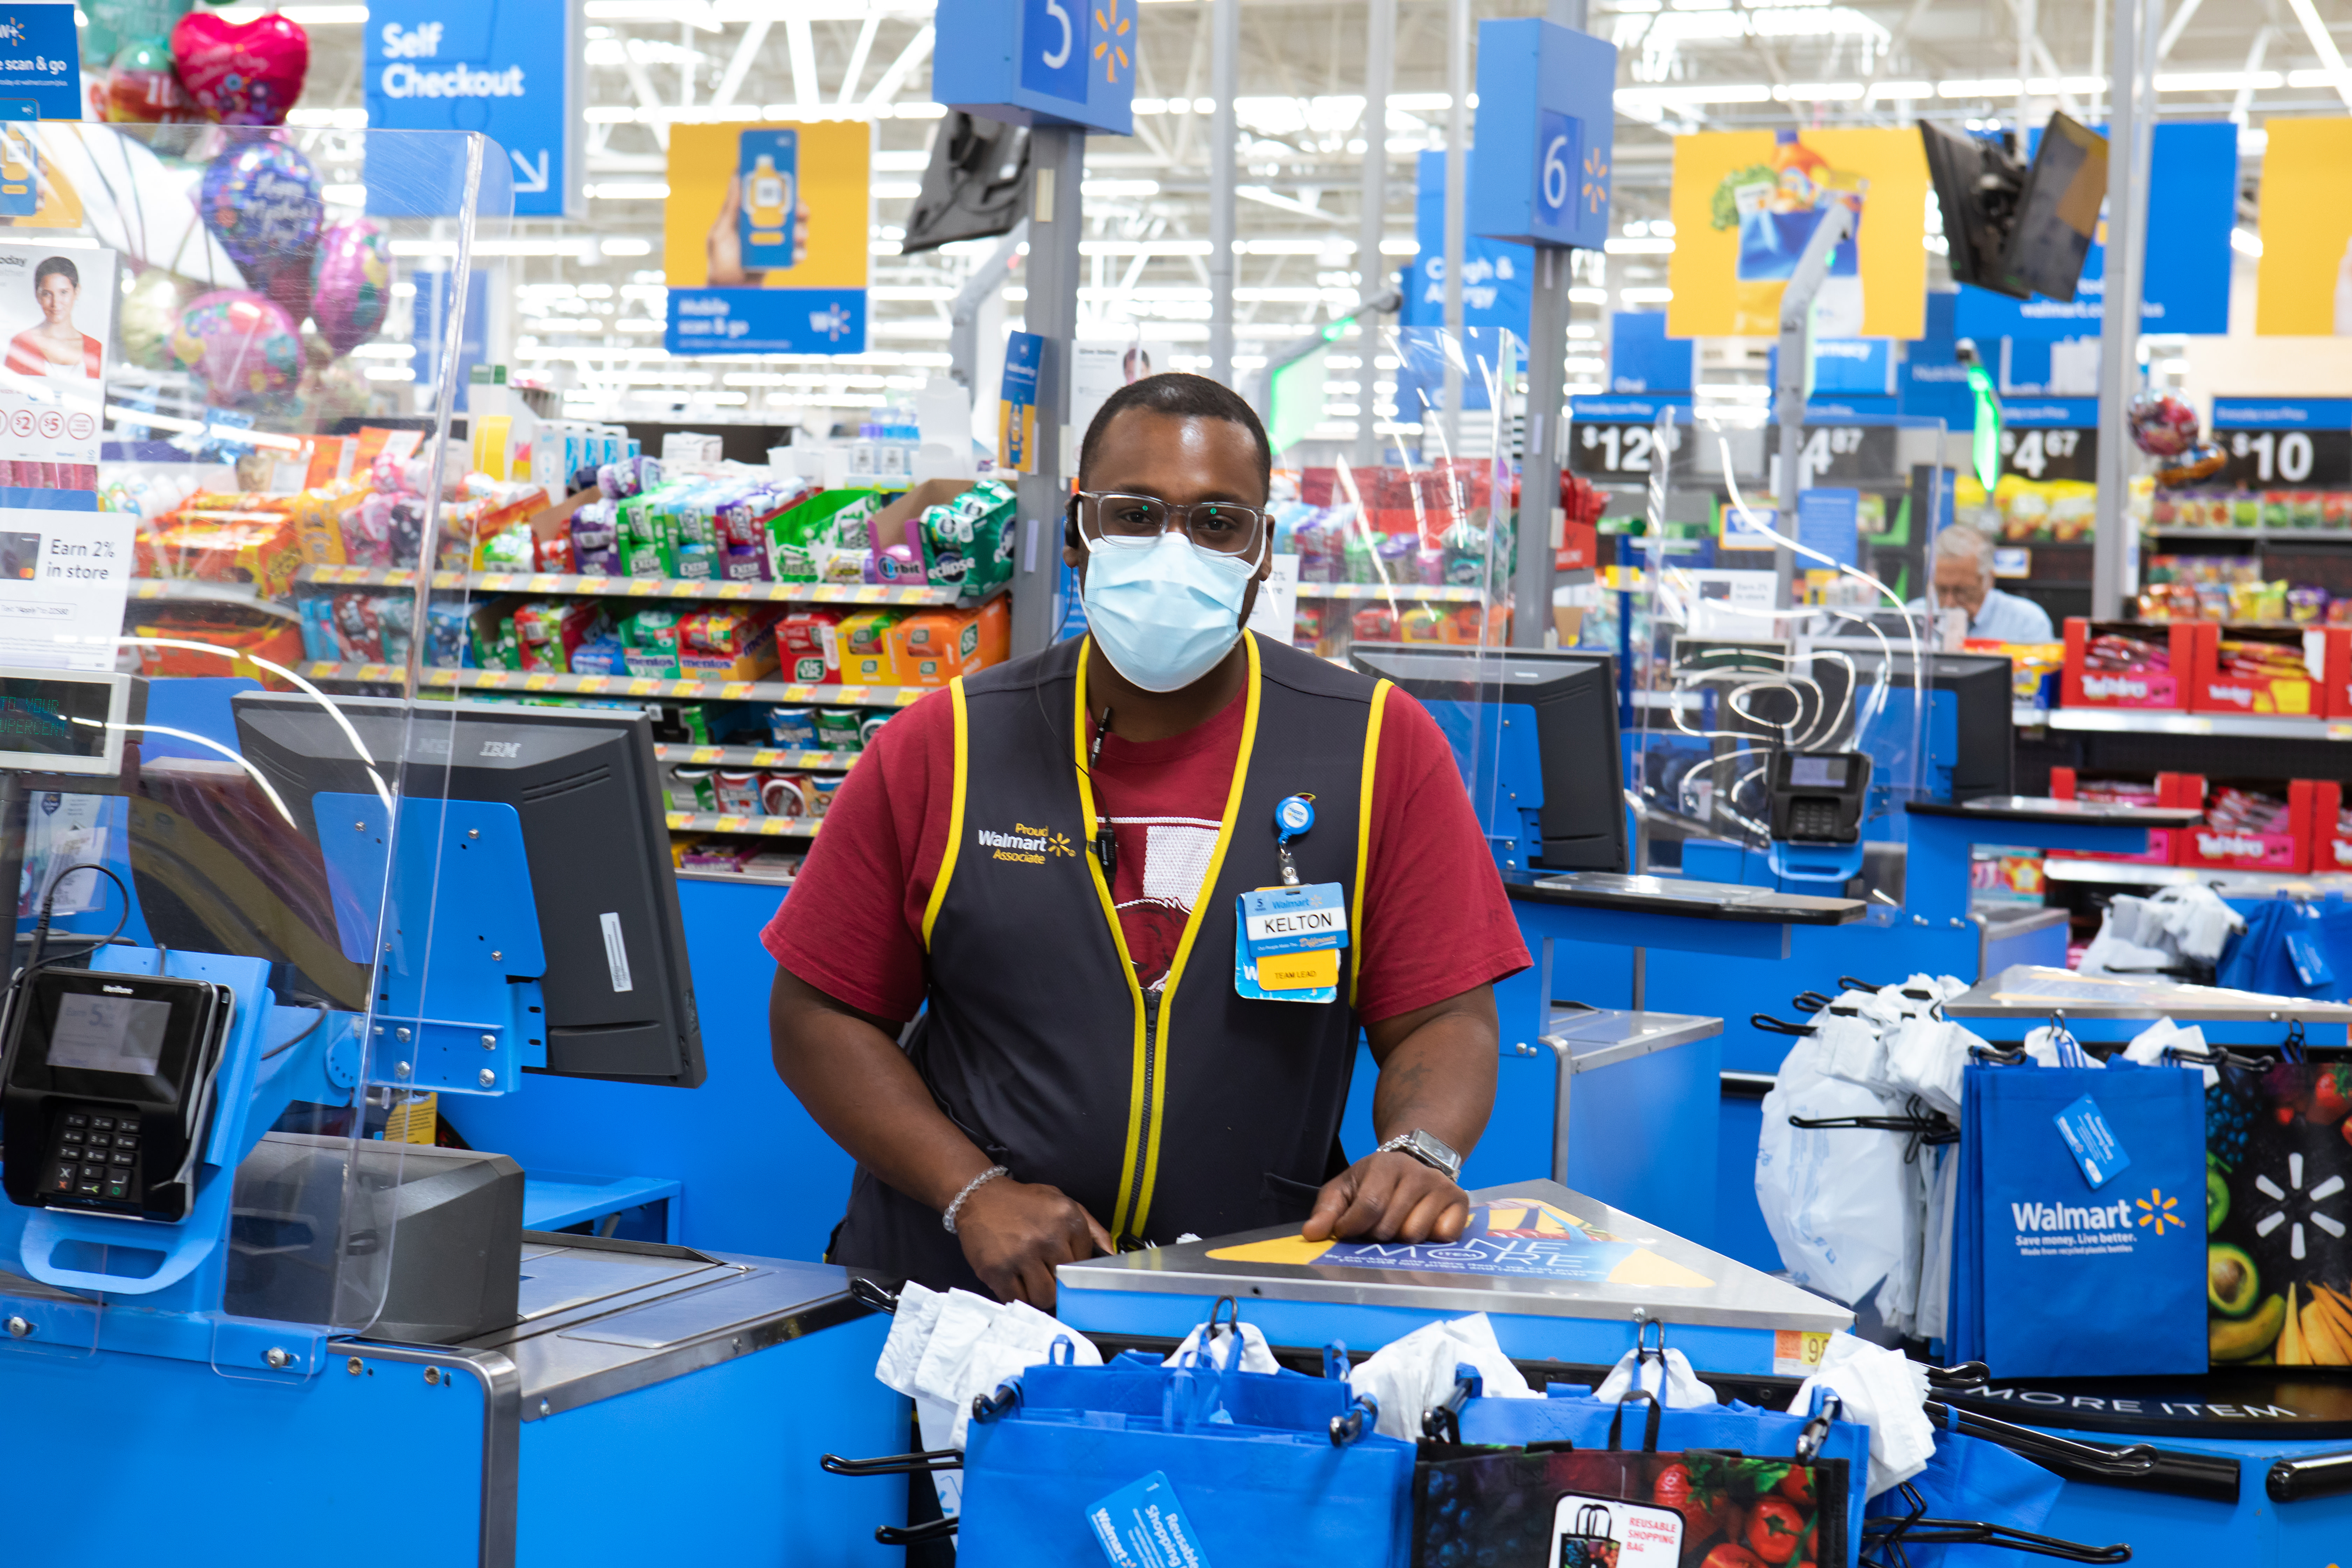 Walmart associate Kelton wears a mask at a checkout register